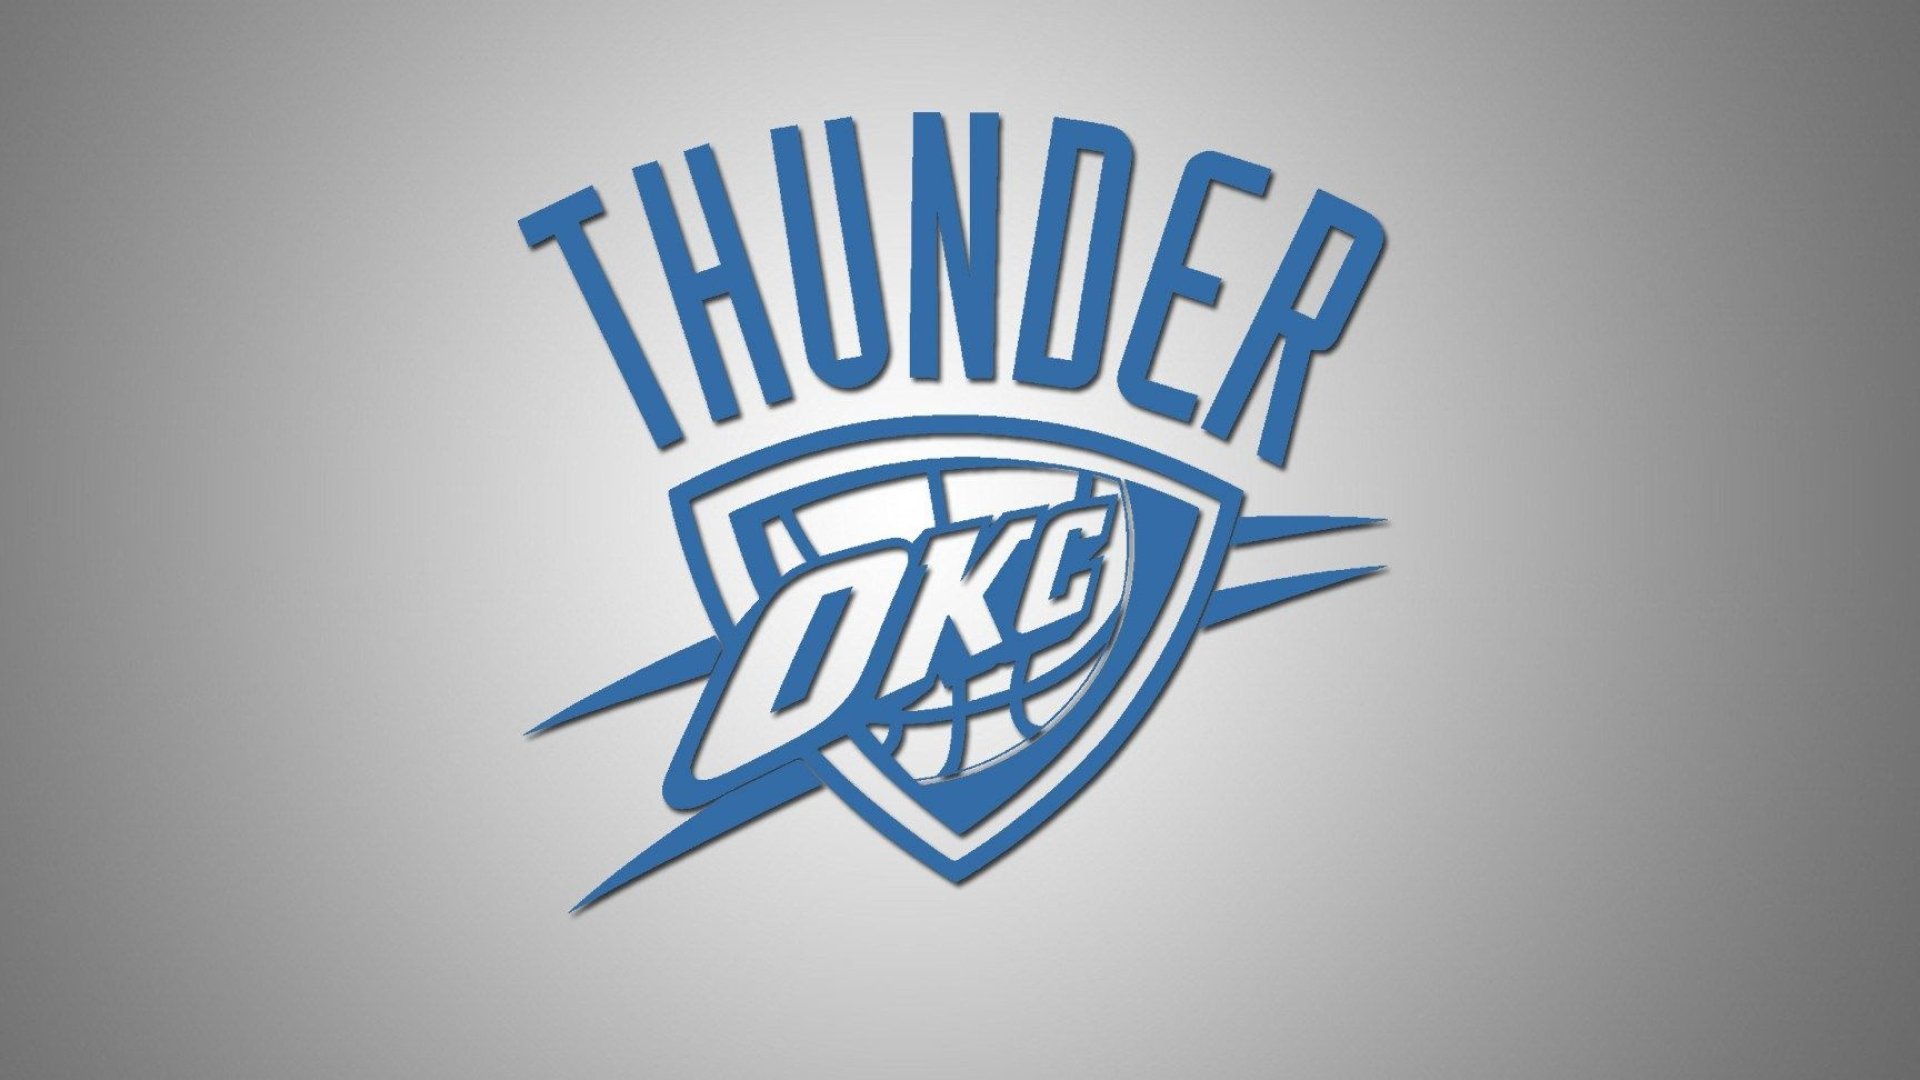 Oklahoma City Thunder, Thunder backgrounds, NBA team, Sports wallpapers, 1920x1080 Full HD Desktop